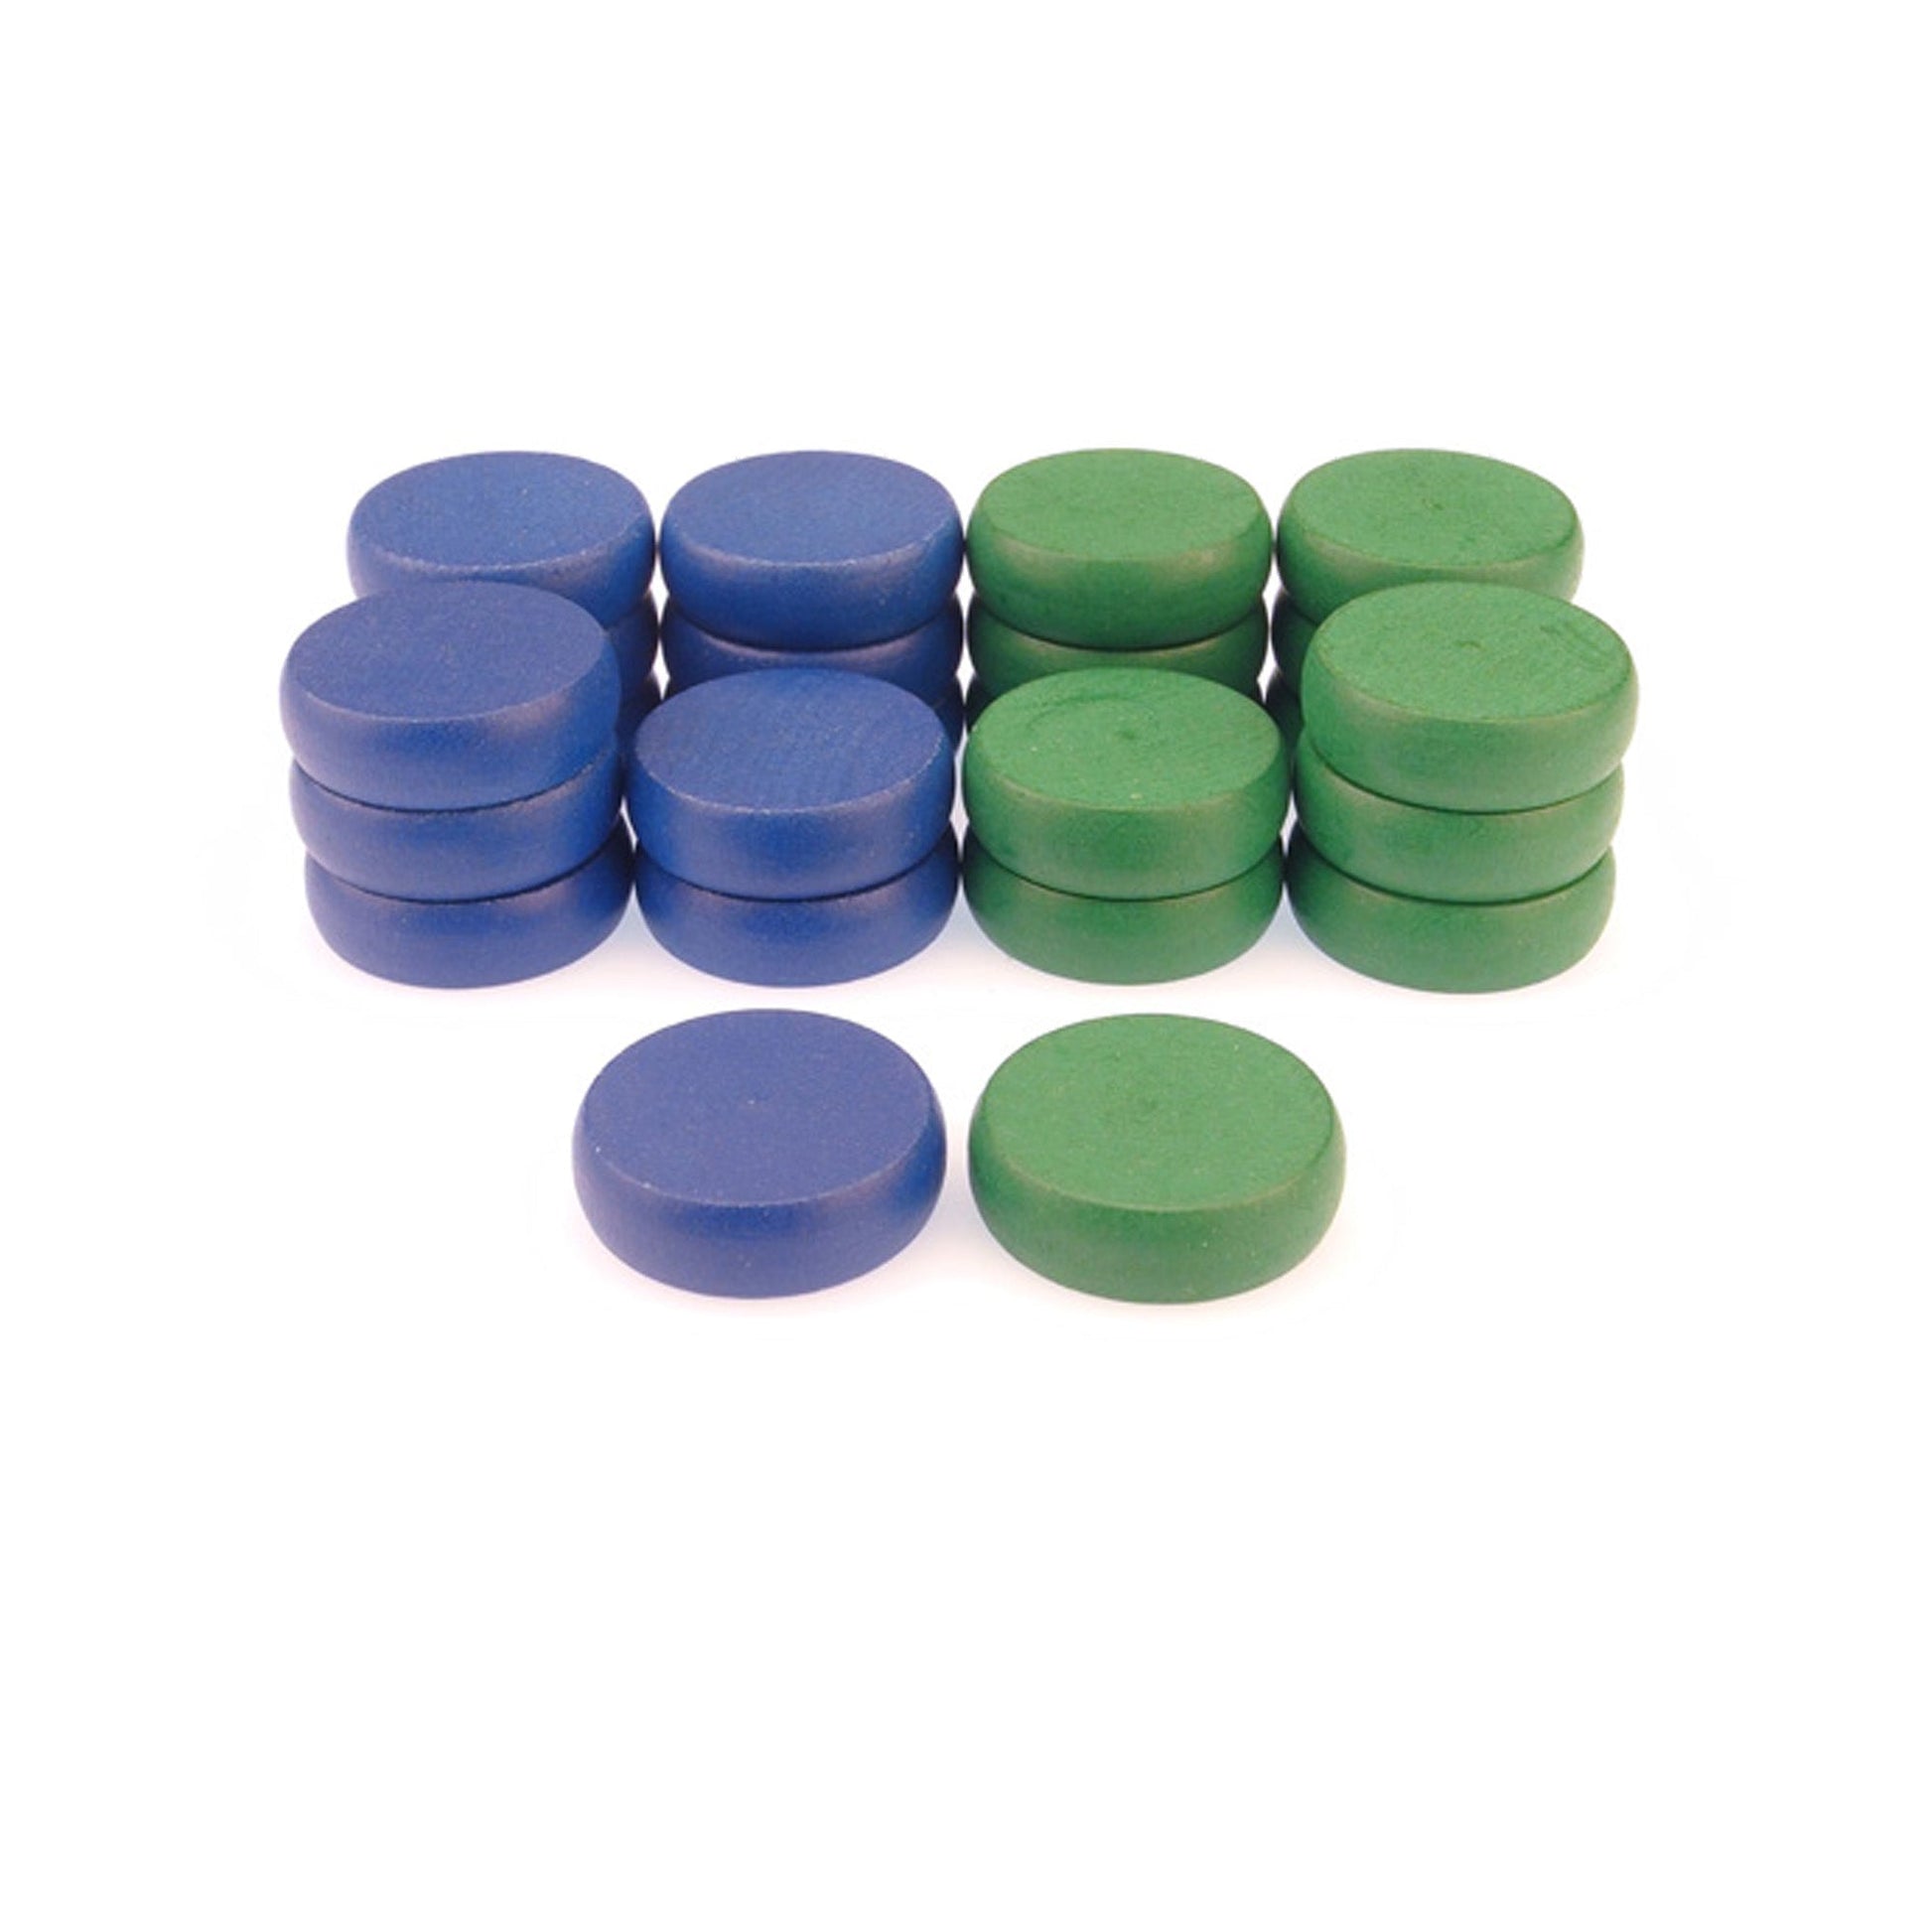 26-blue-green crokinole tournament discs